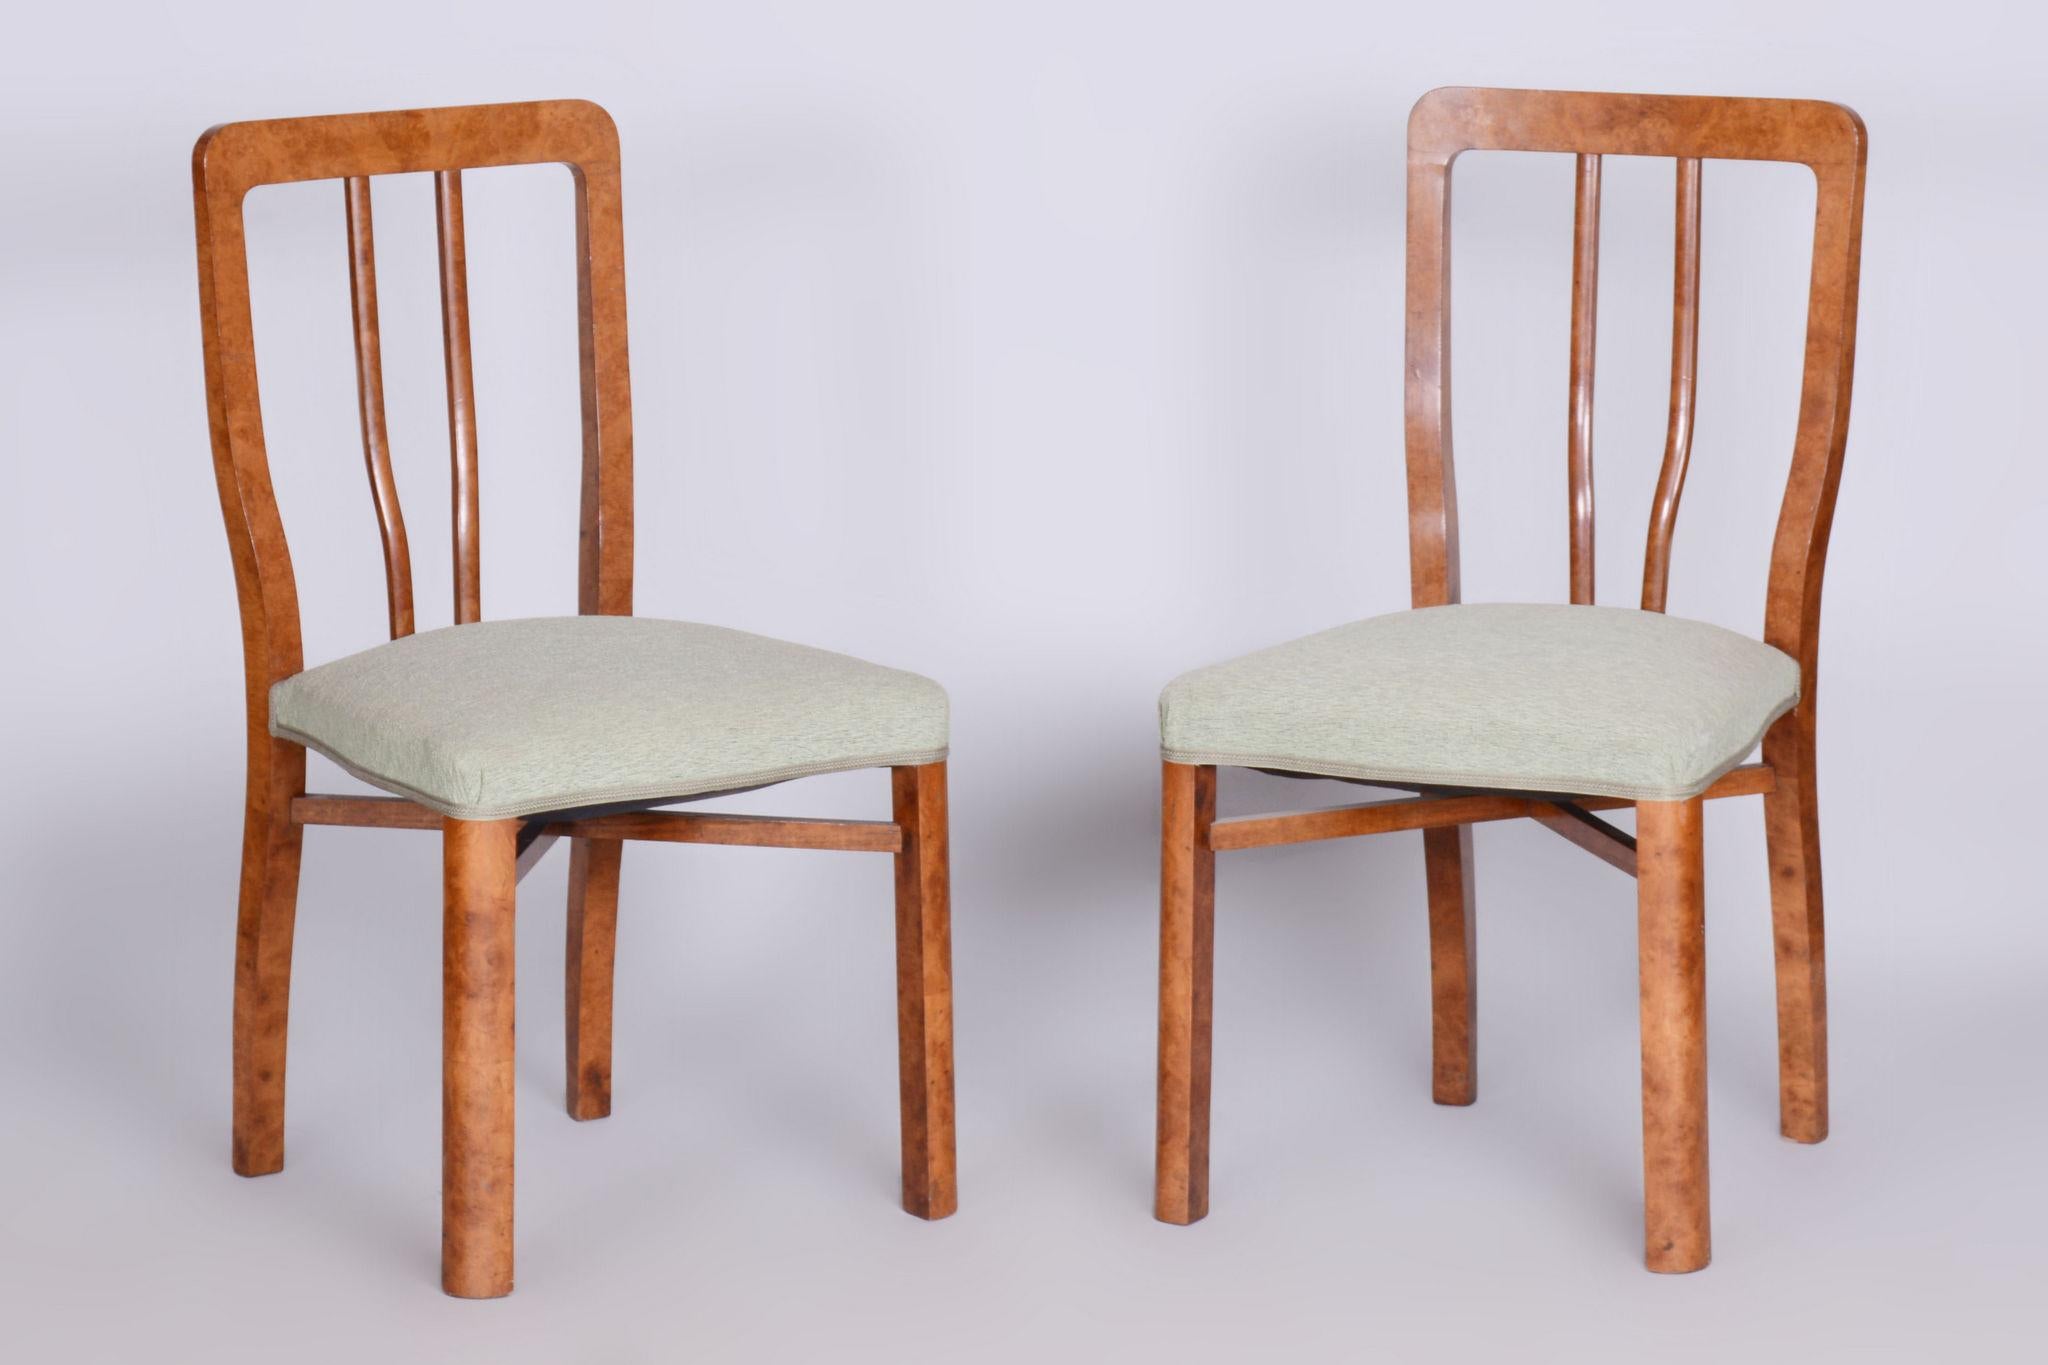 Restored ArtDeco Seating Set, Beech, Maple Root Veneer, Czechia, 1930s For Sale 14